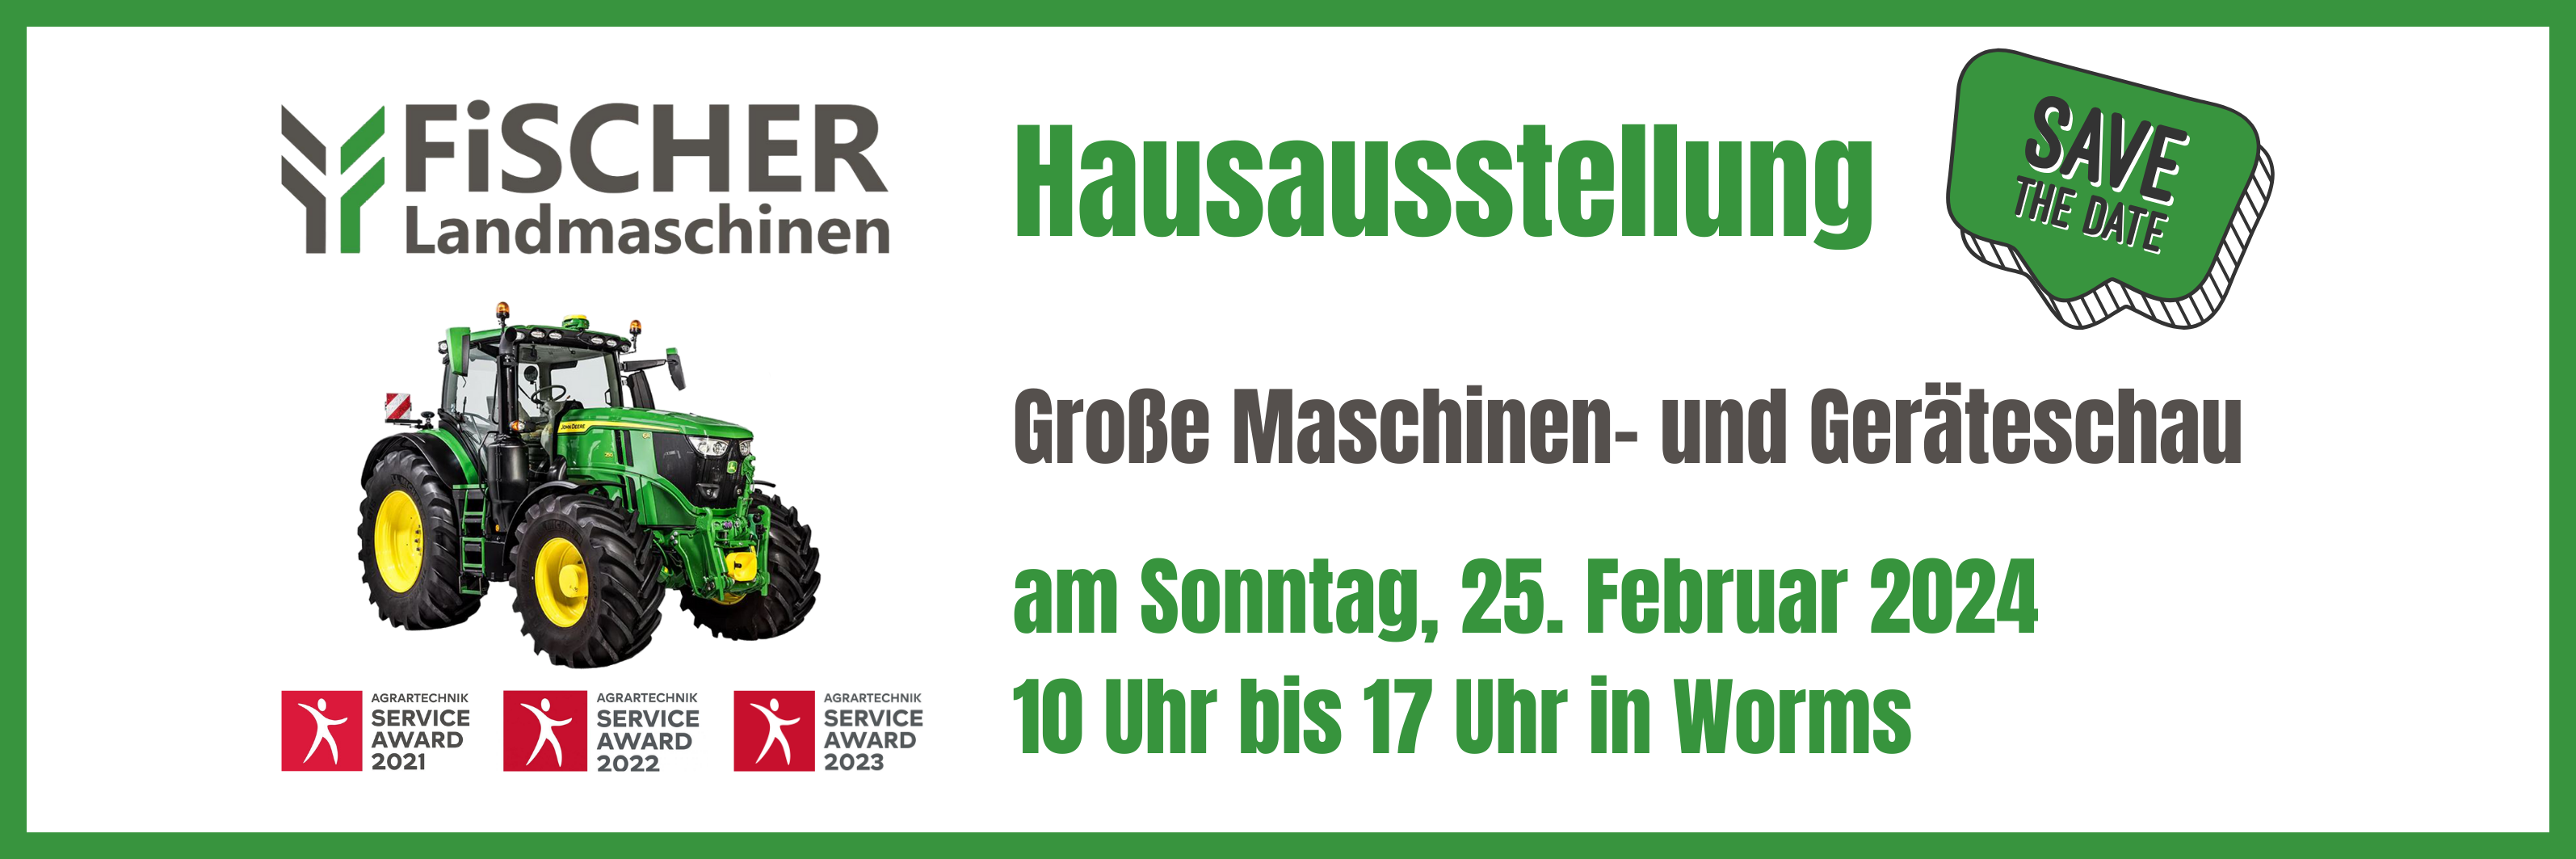 https://fischer-landmaschinen.net/wp-content/uploads/2024/01/Slider-Homepage-Hausmesse-WO-1.png